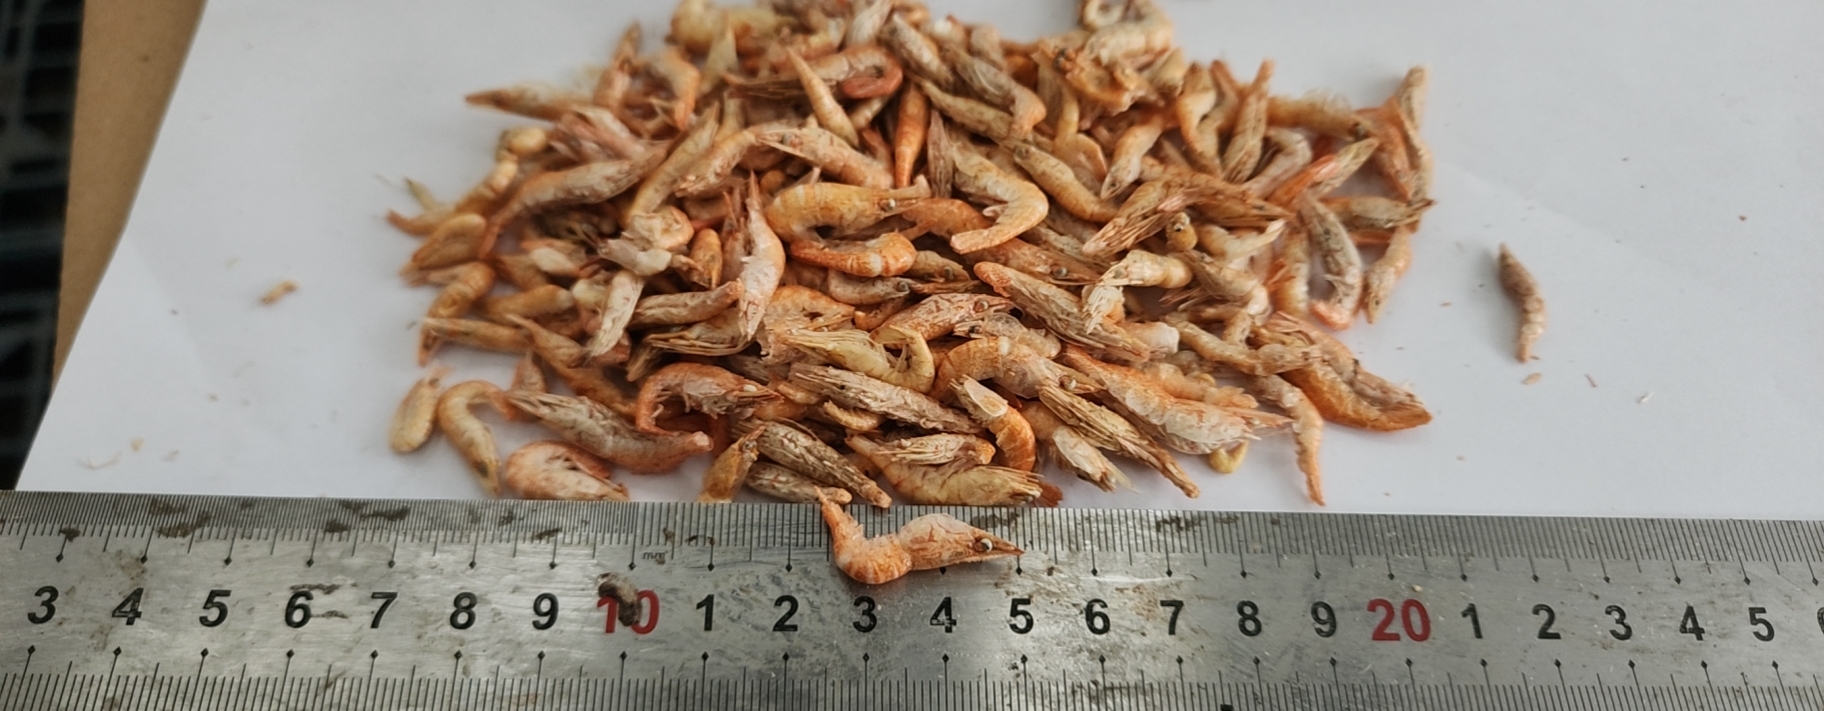 Freeze dried red shrimps2-4cm